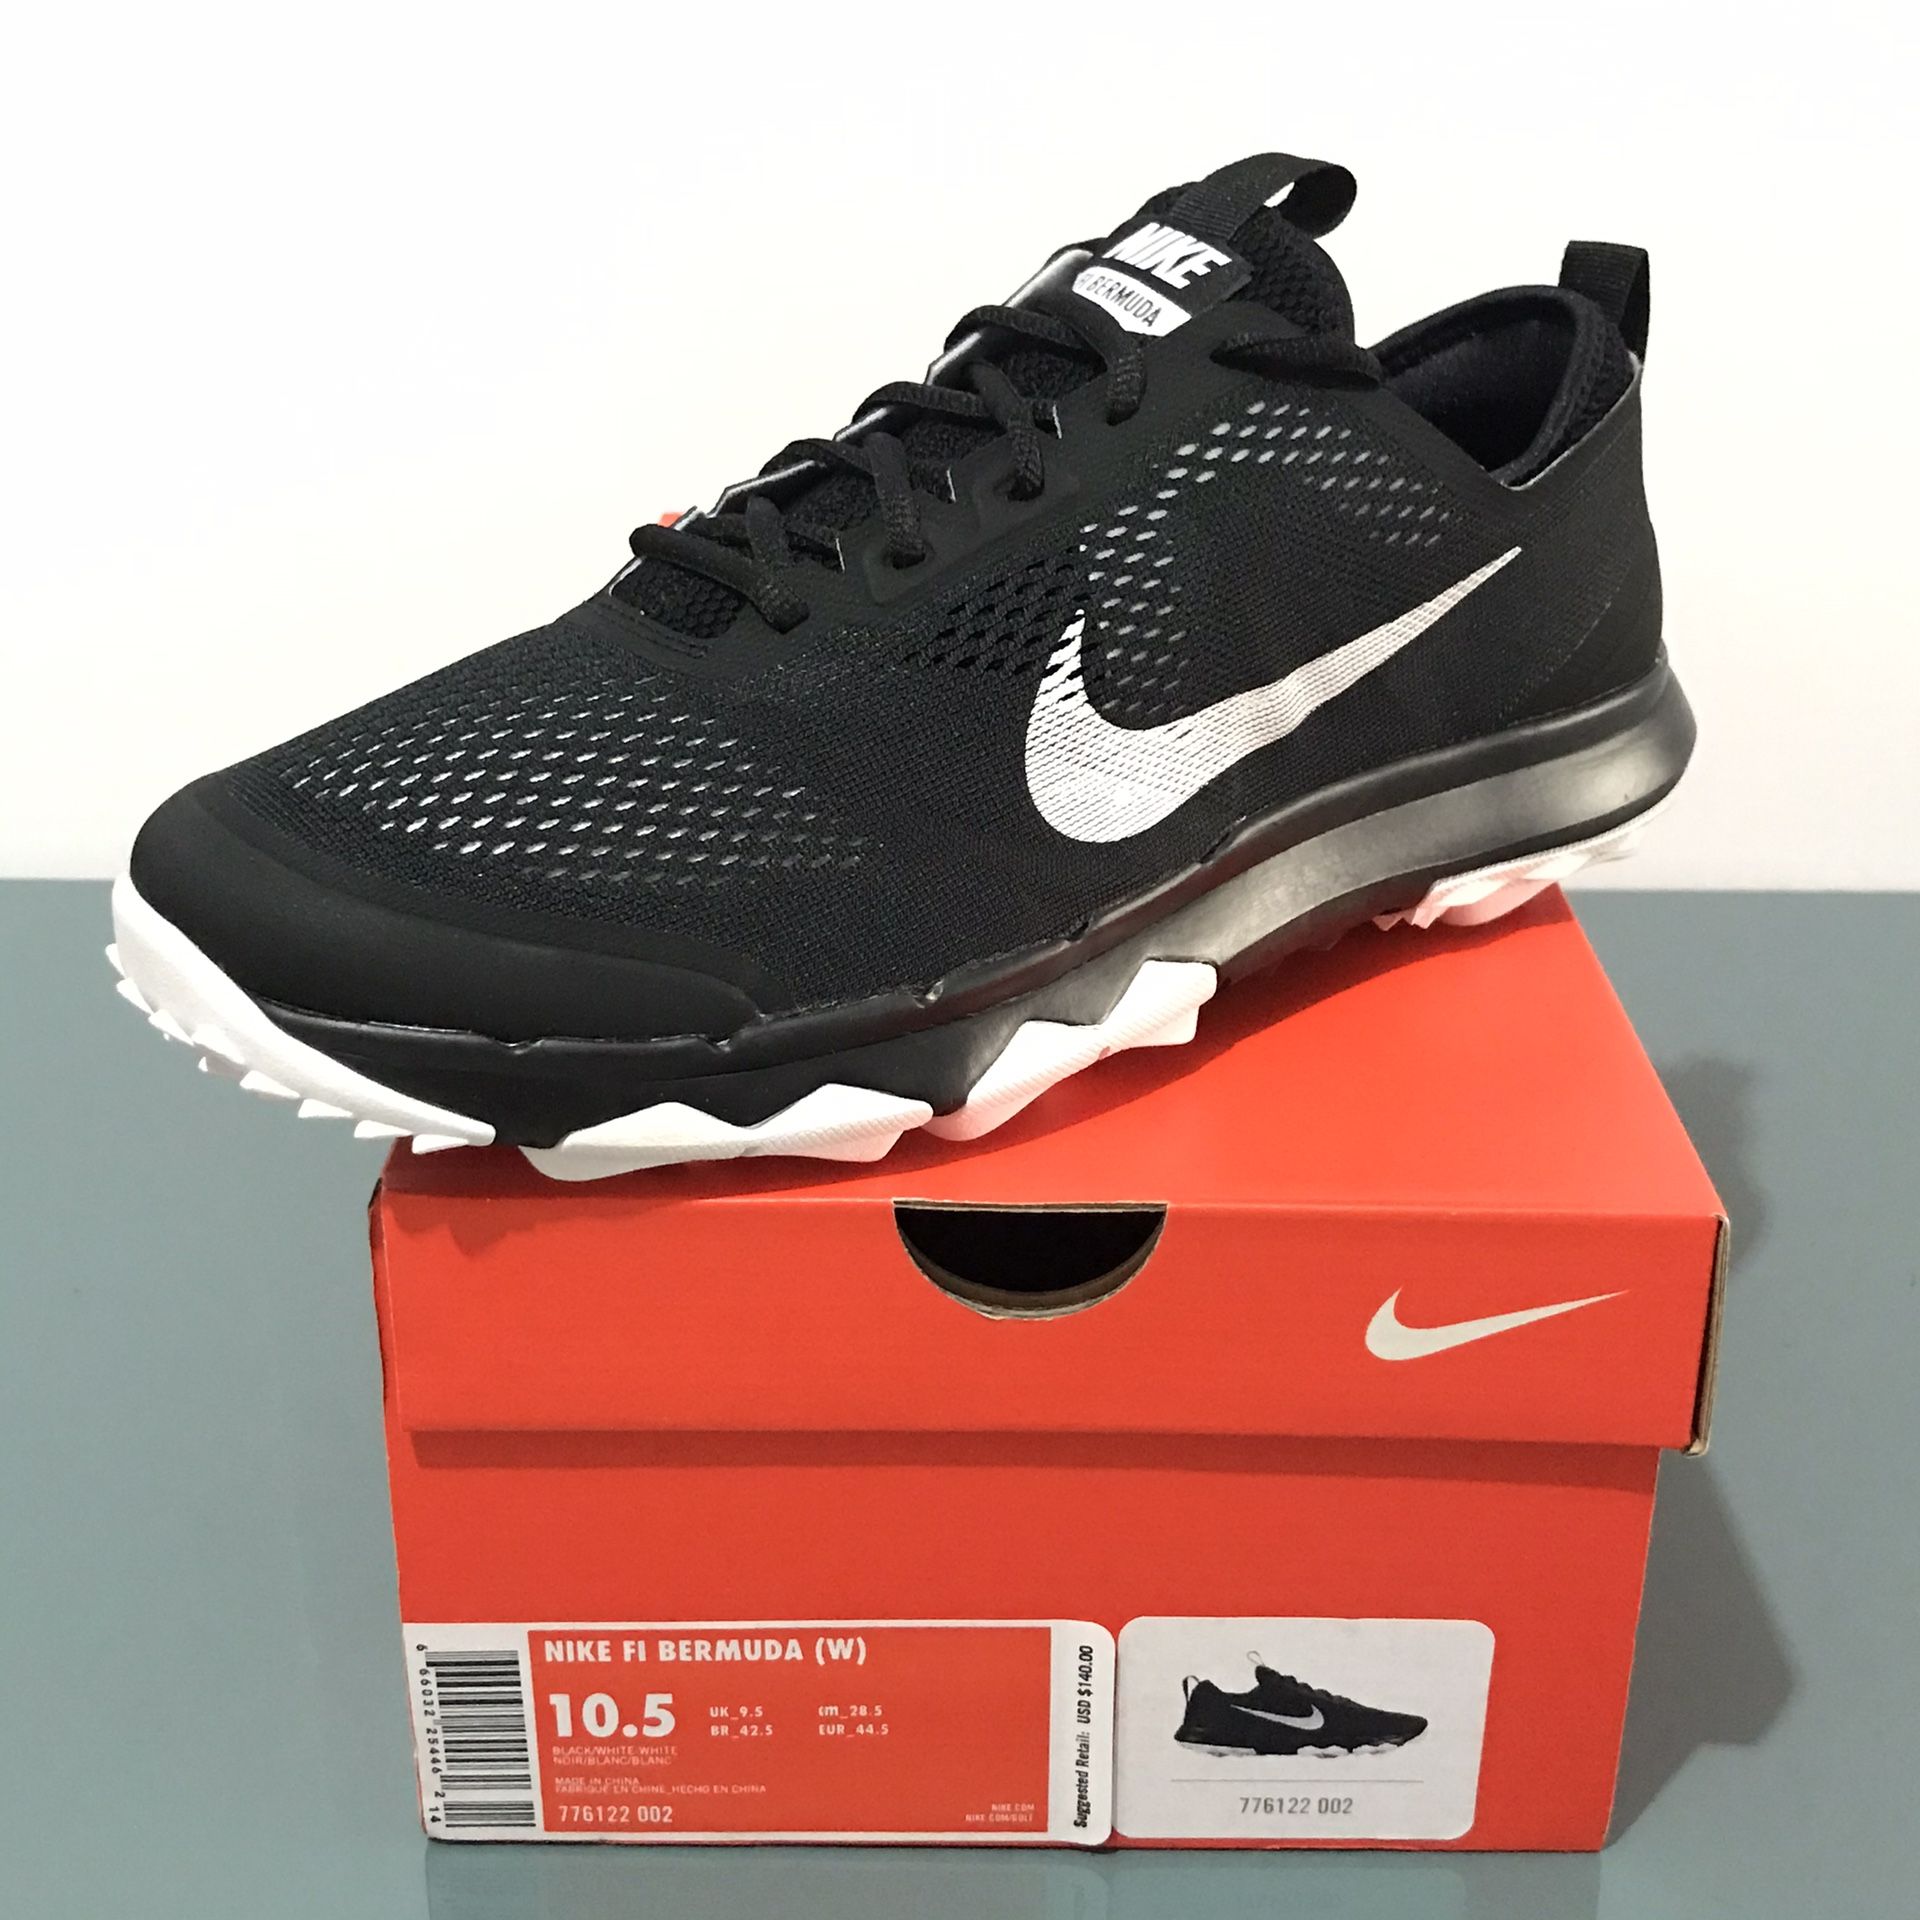 Nike FI Bermuda Mens Golf Shoes Sz 10.5 Wide New